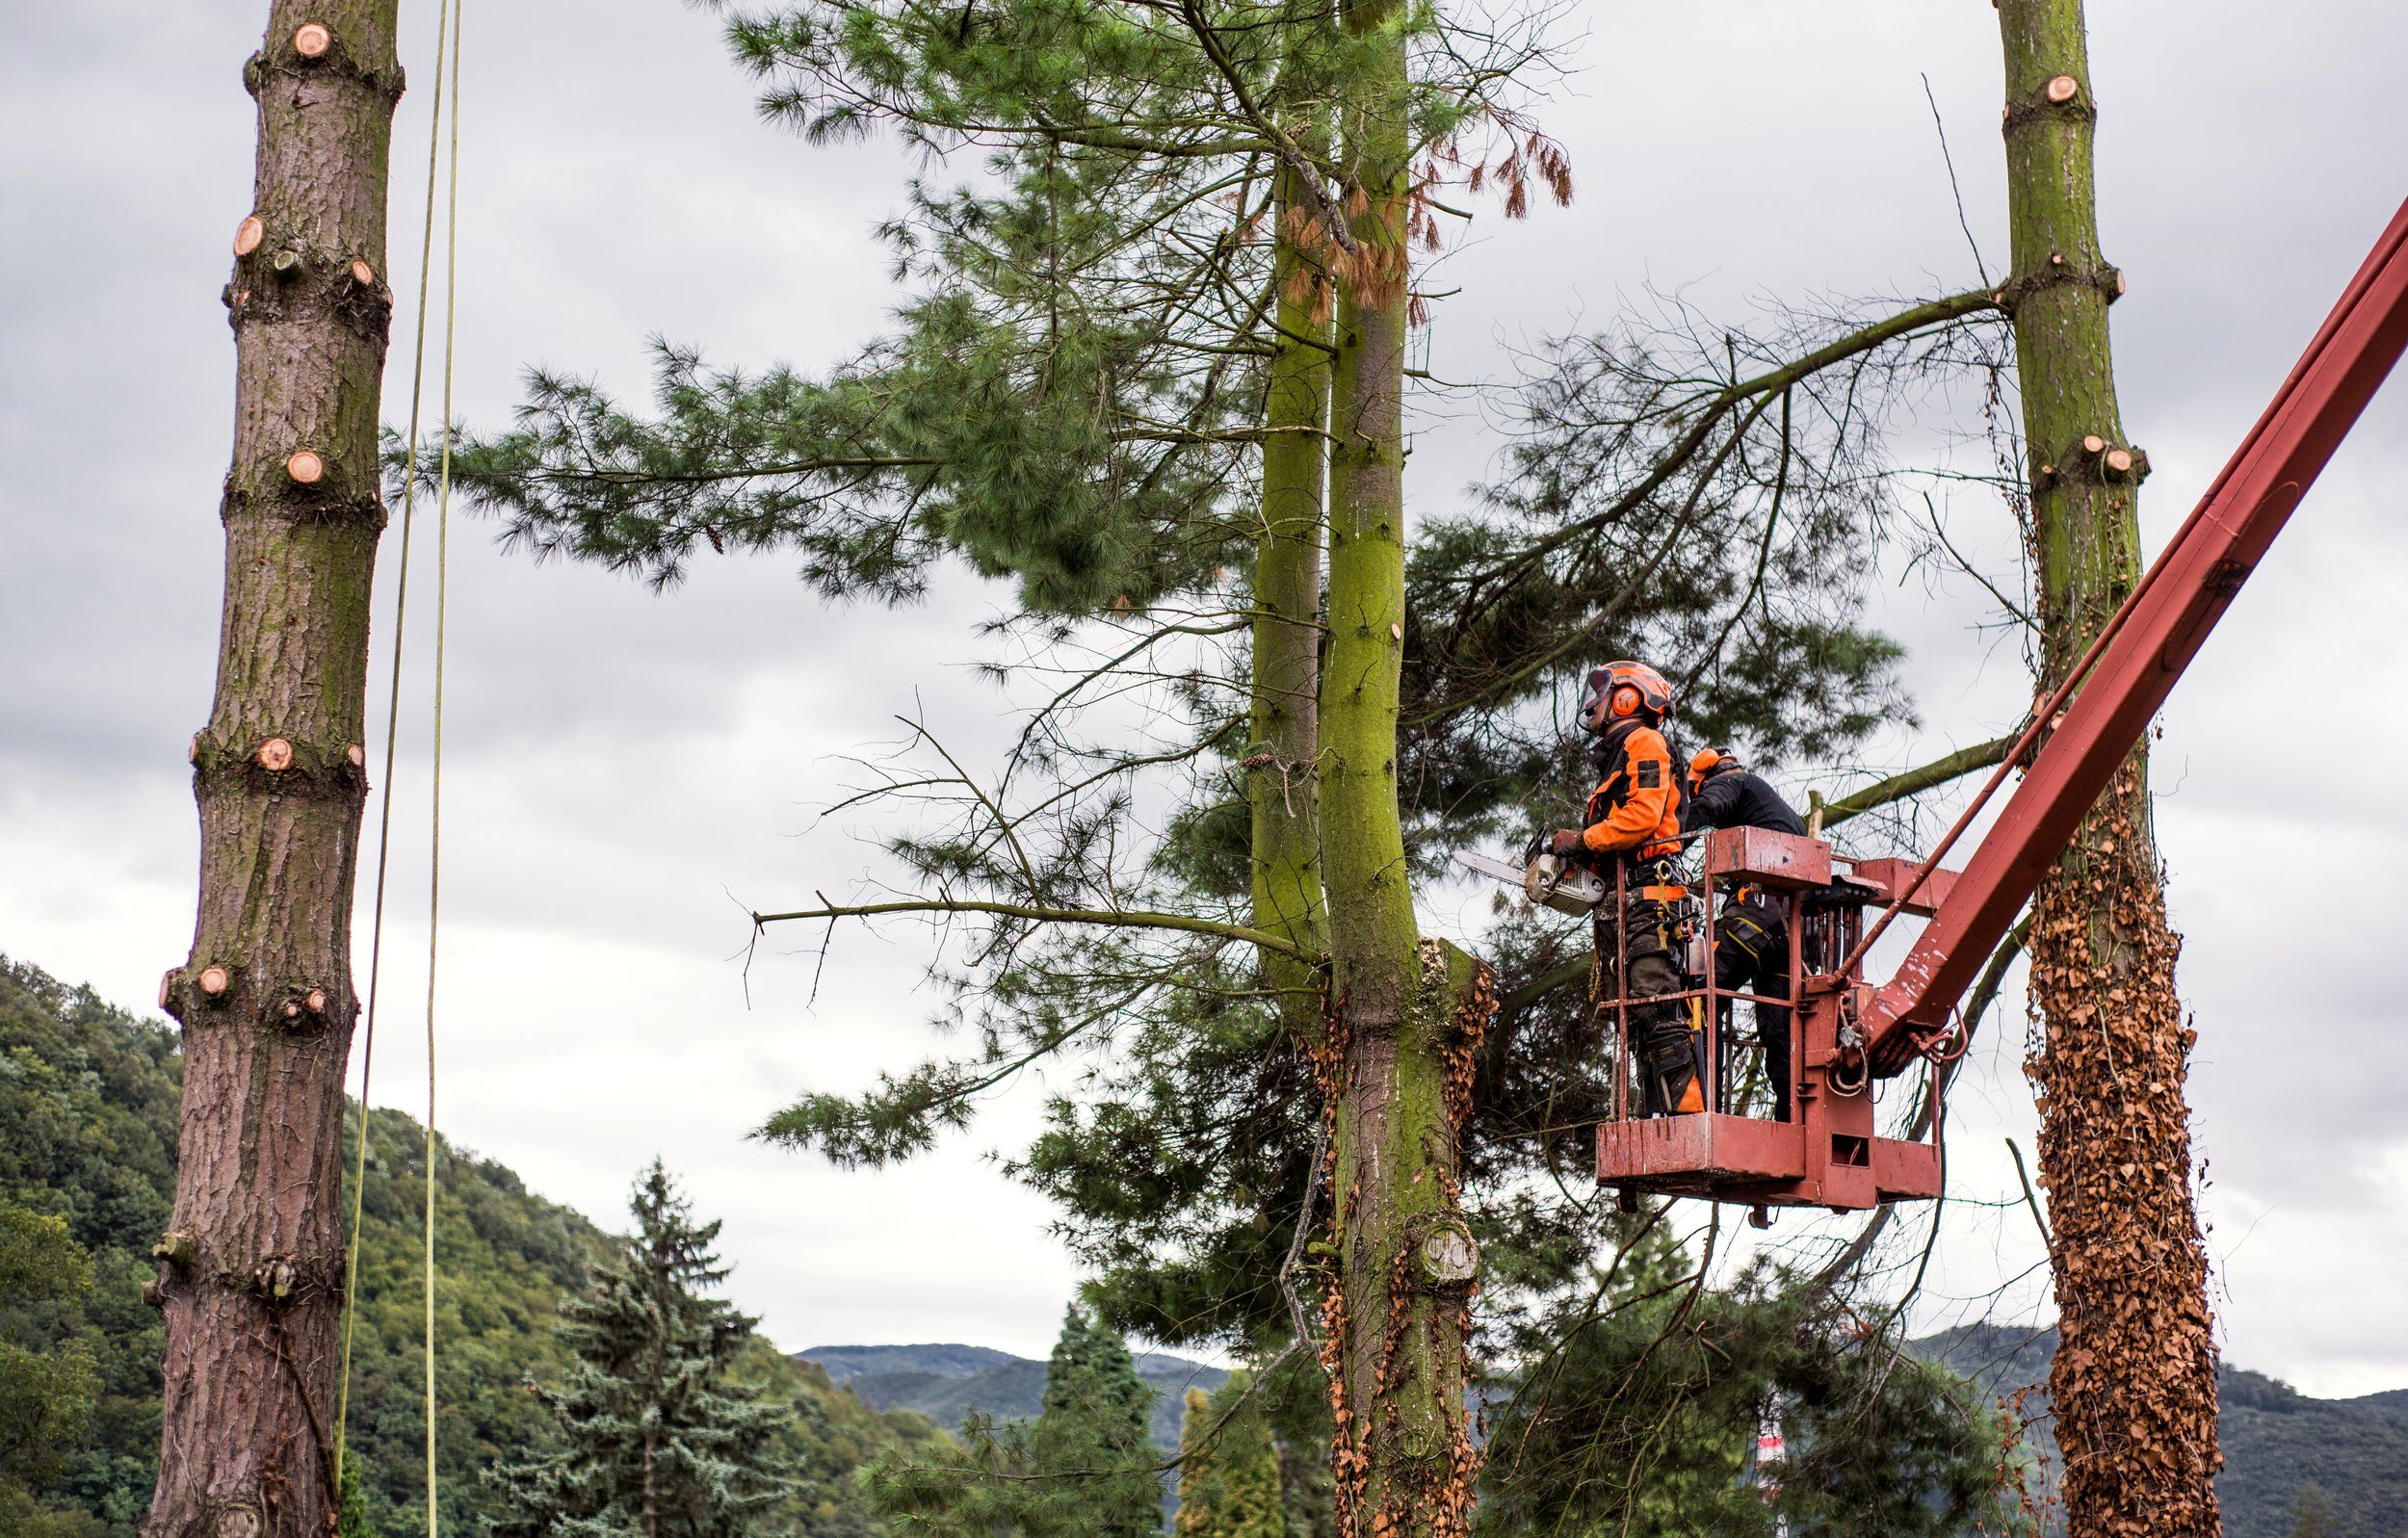 arborist-men-with-chainsaw-and-lifting-platform-cu-2021-08-27-16-14-37-utc.jpg